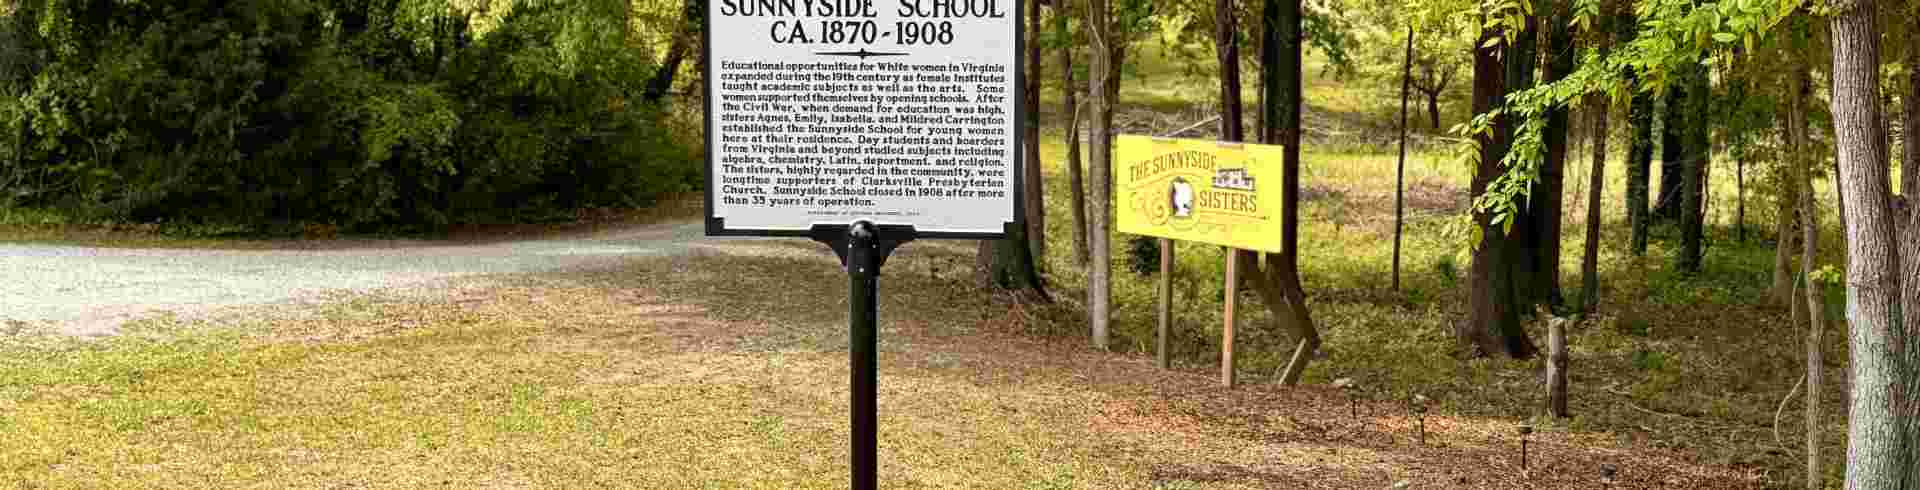 The Sunnyside Sisters Bed and Breakfast / Clarksville VA / Historical Highway Marker Sunnyside School revealwd